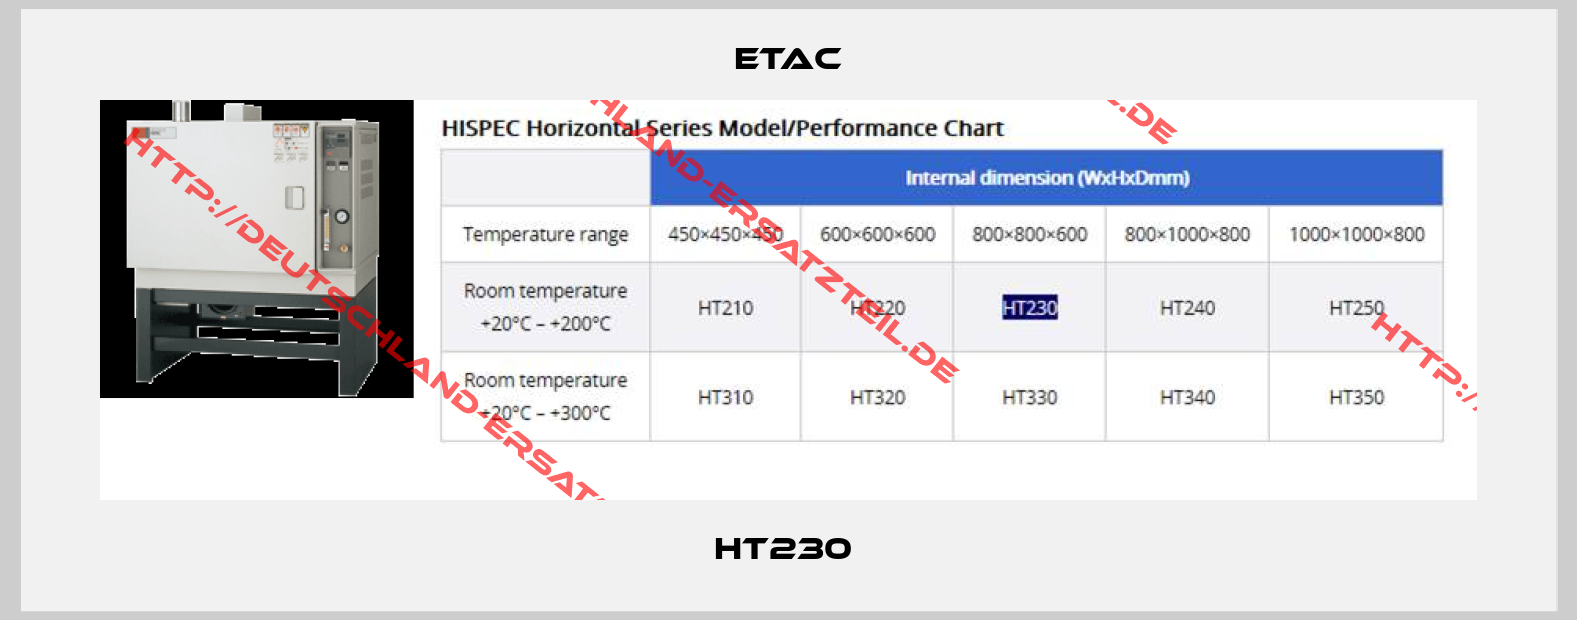 ETAC-HT230 